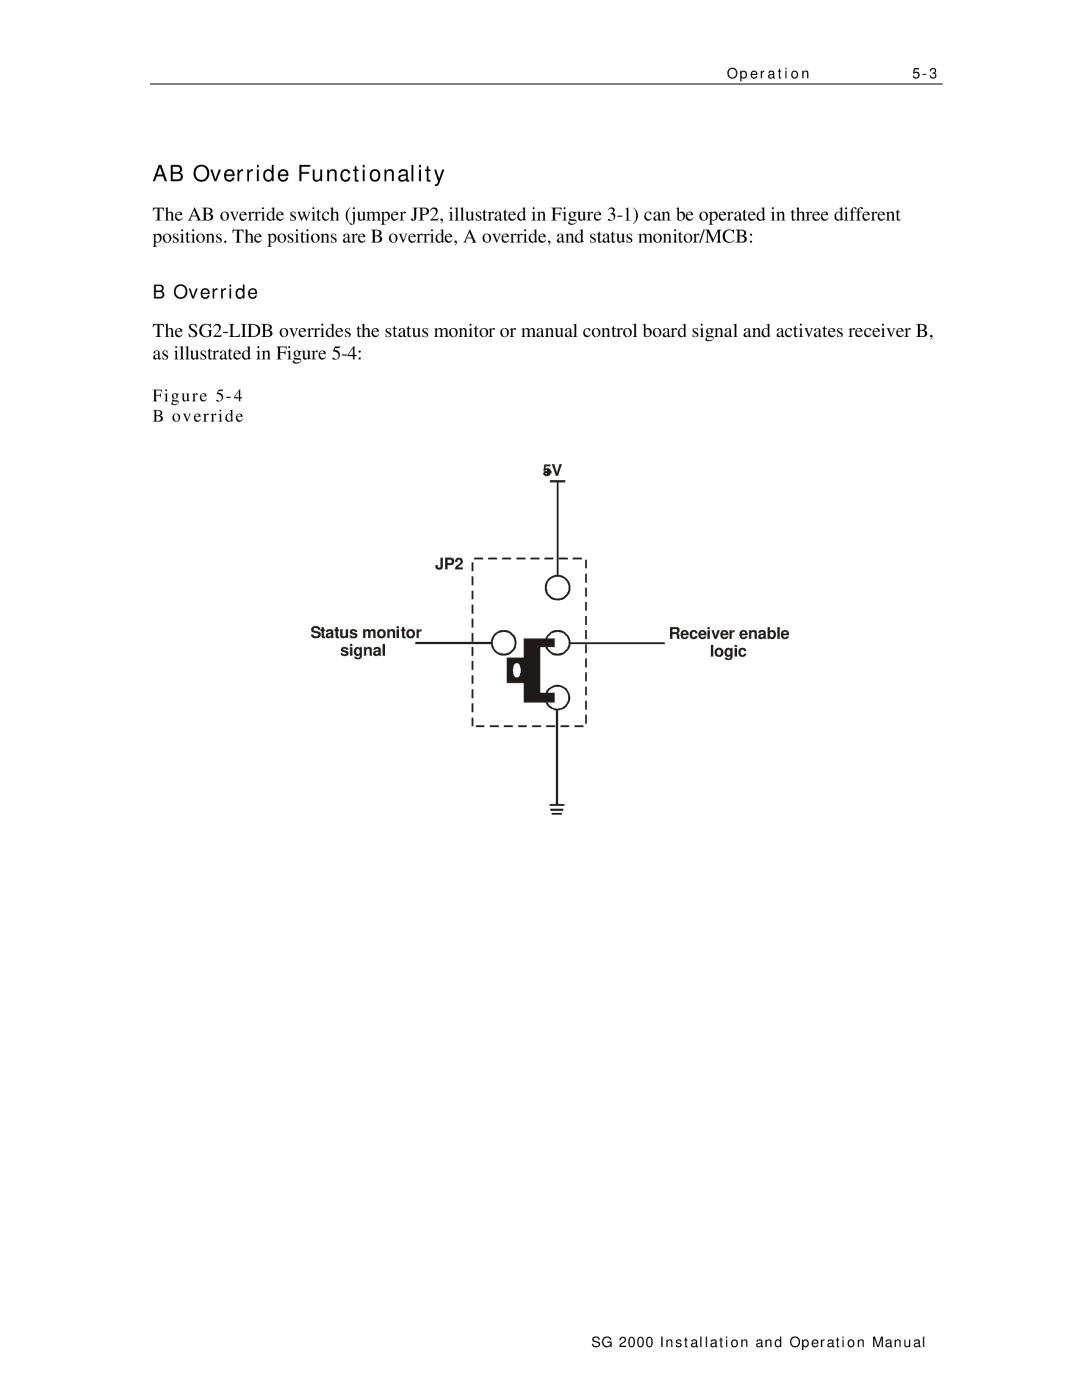 Motorola SG 2000 operation manual AB Override Functionality 